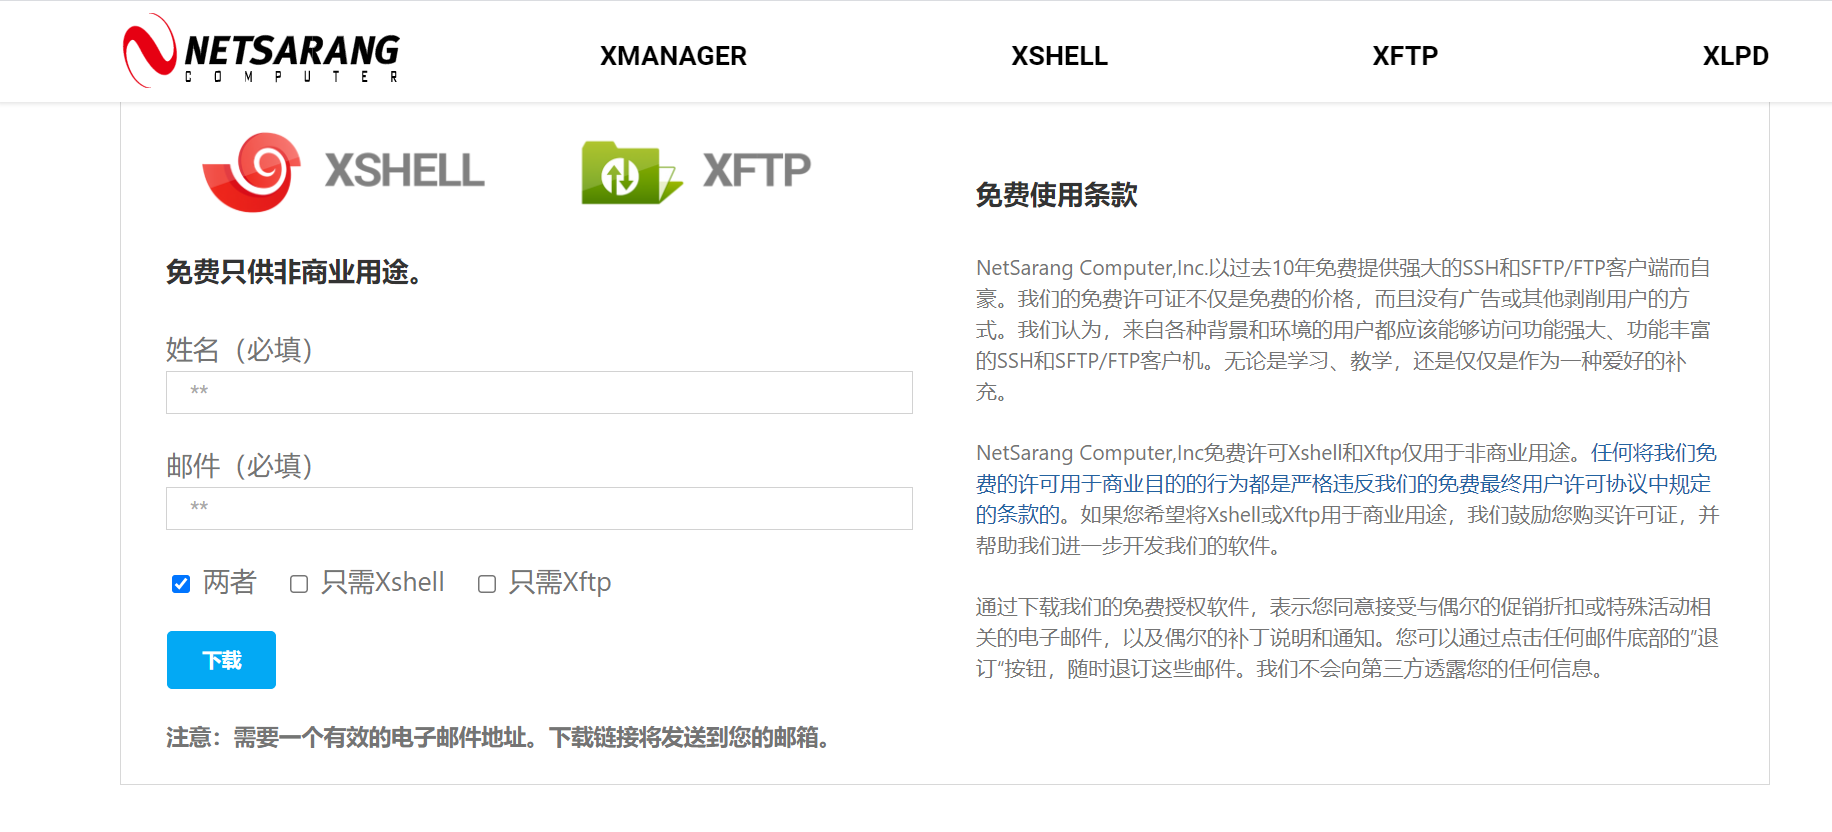 Xshell和Xftp免费的许可证